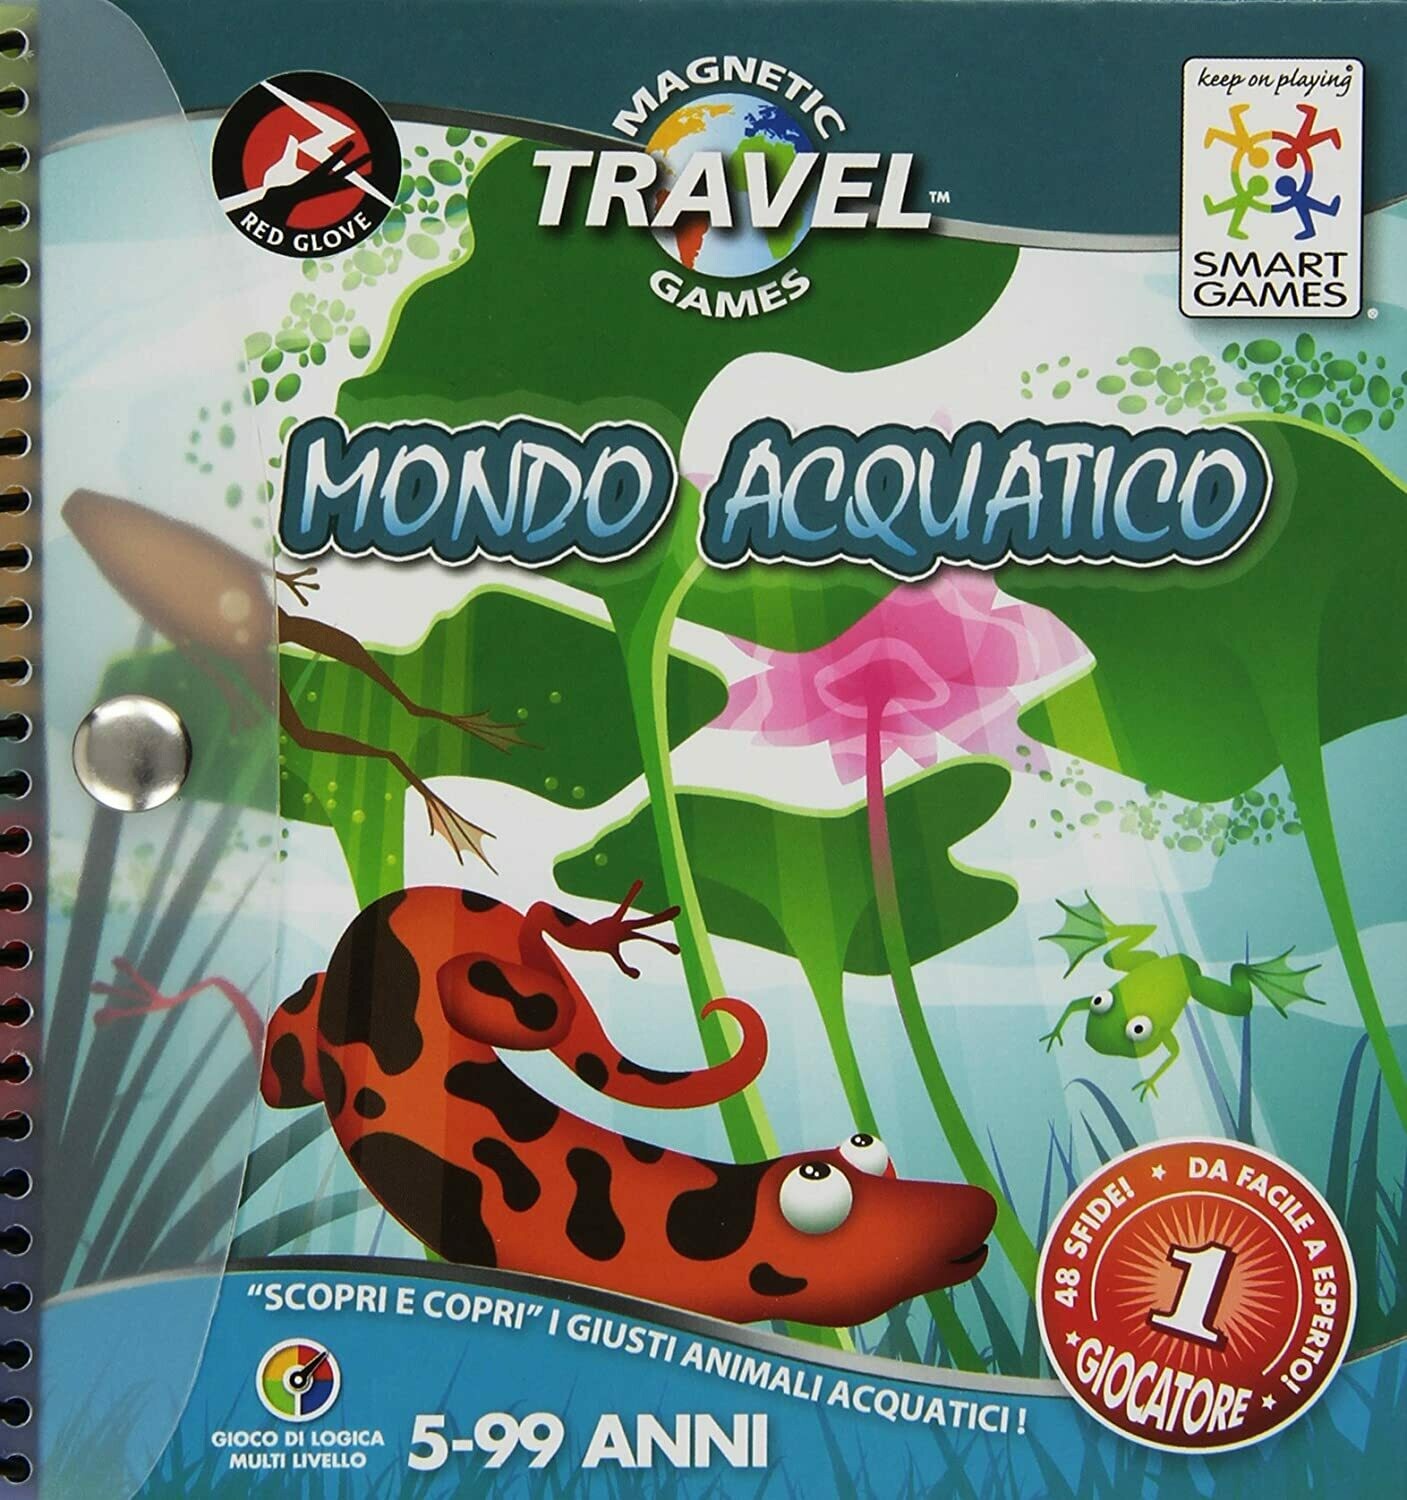 Mondo acquatico - Magnetic travel games